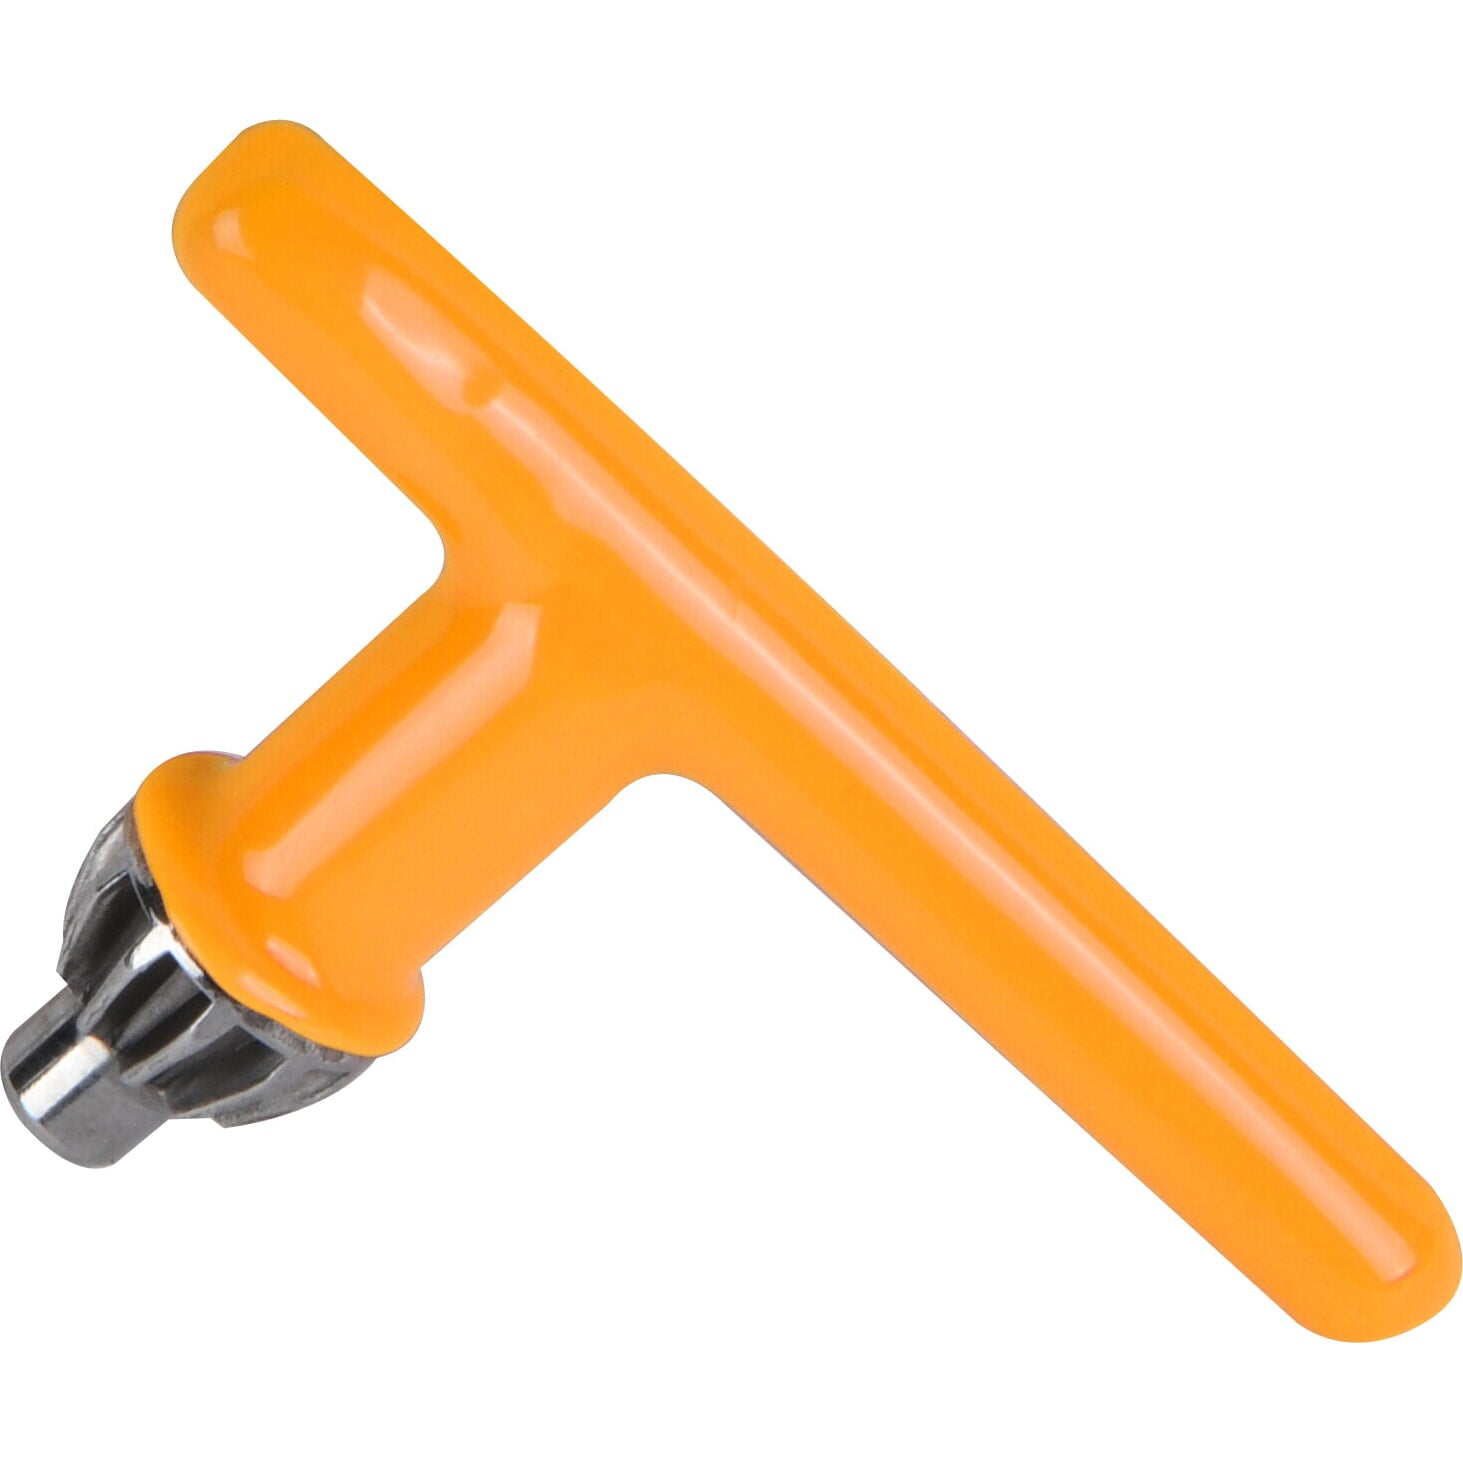 Chaleco Reflectivo De Seguridad Color Naranja (Talla L)– Carbone Store CR